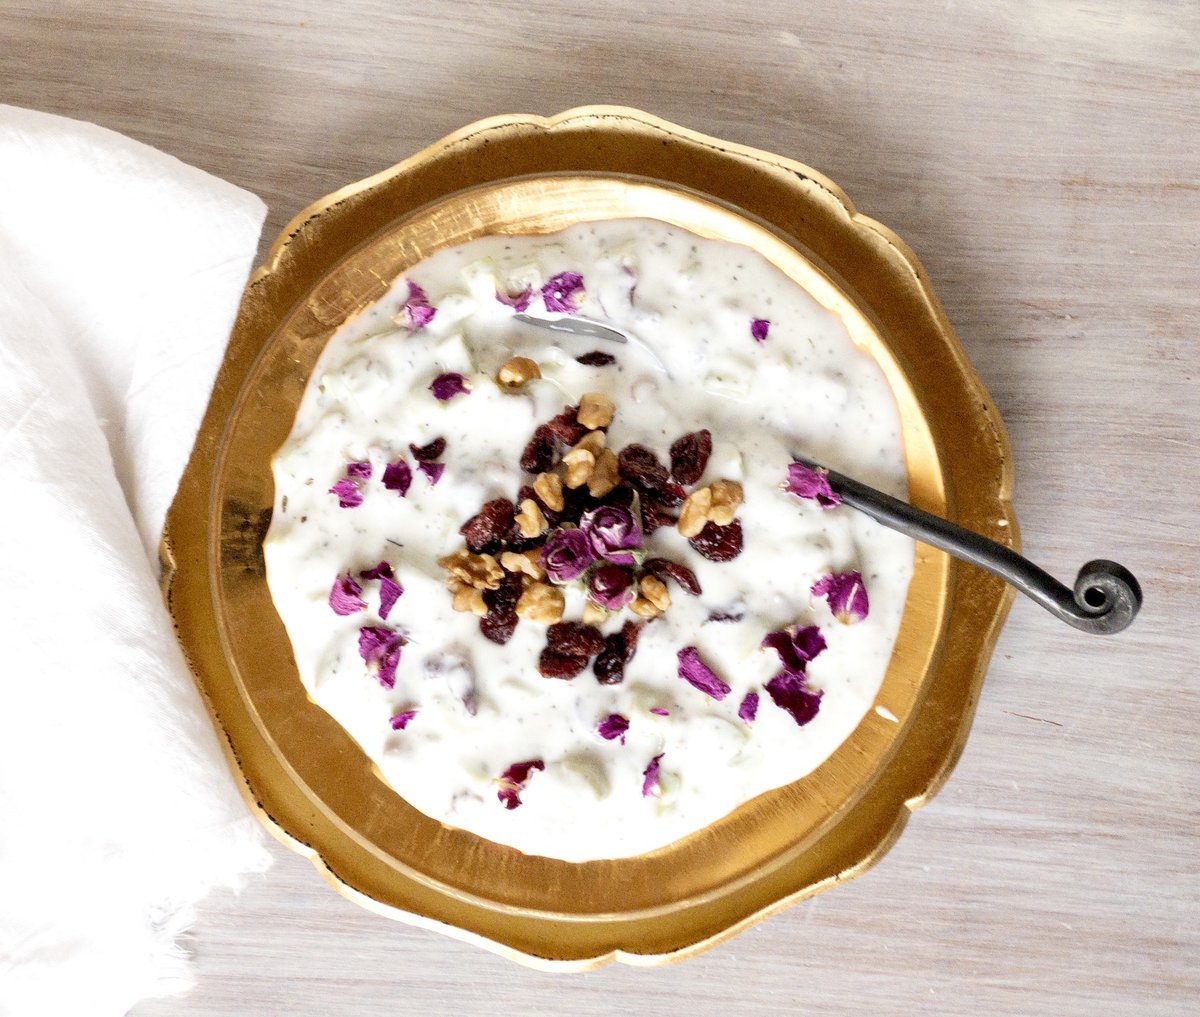 Persian yogurt dip variation with walnuts and cranberries.